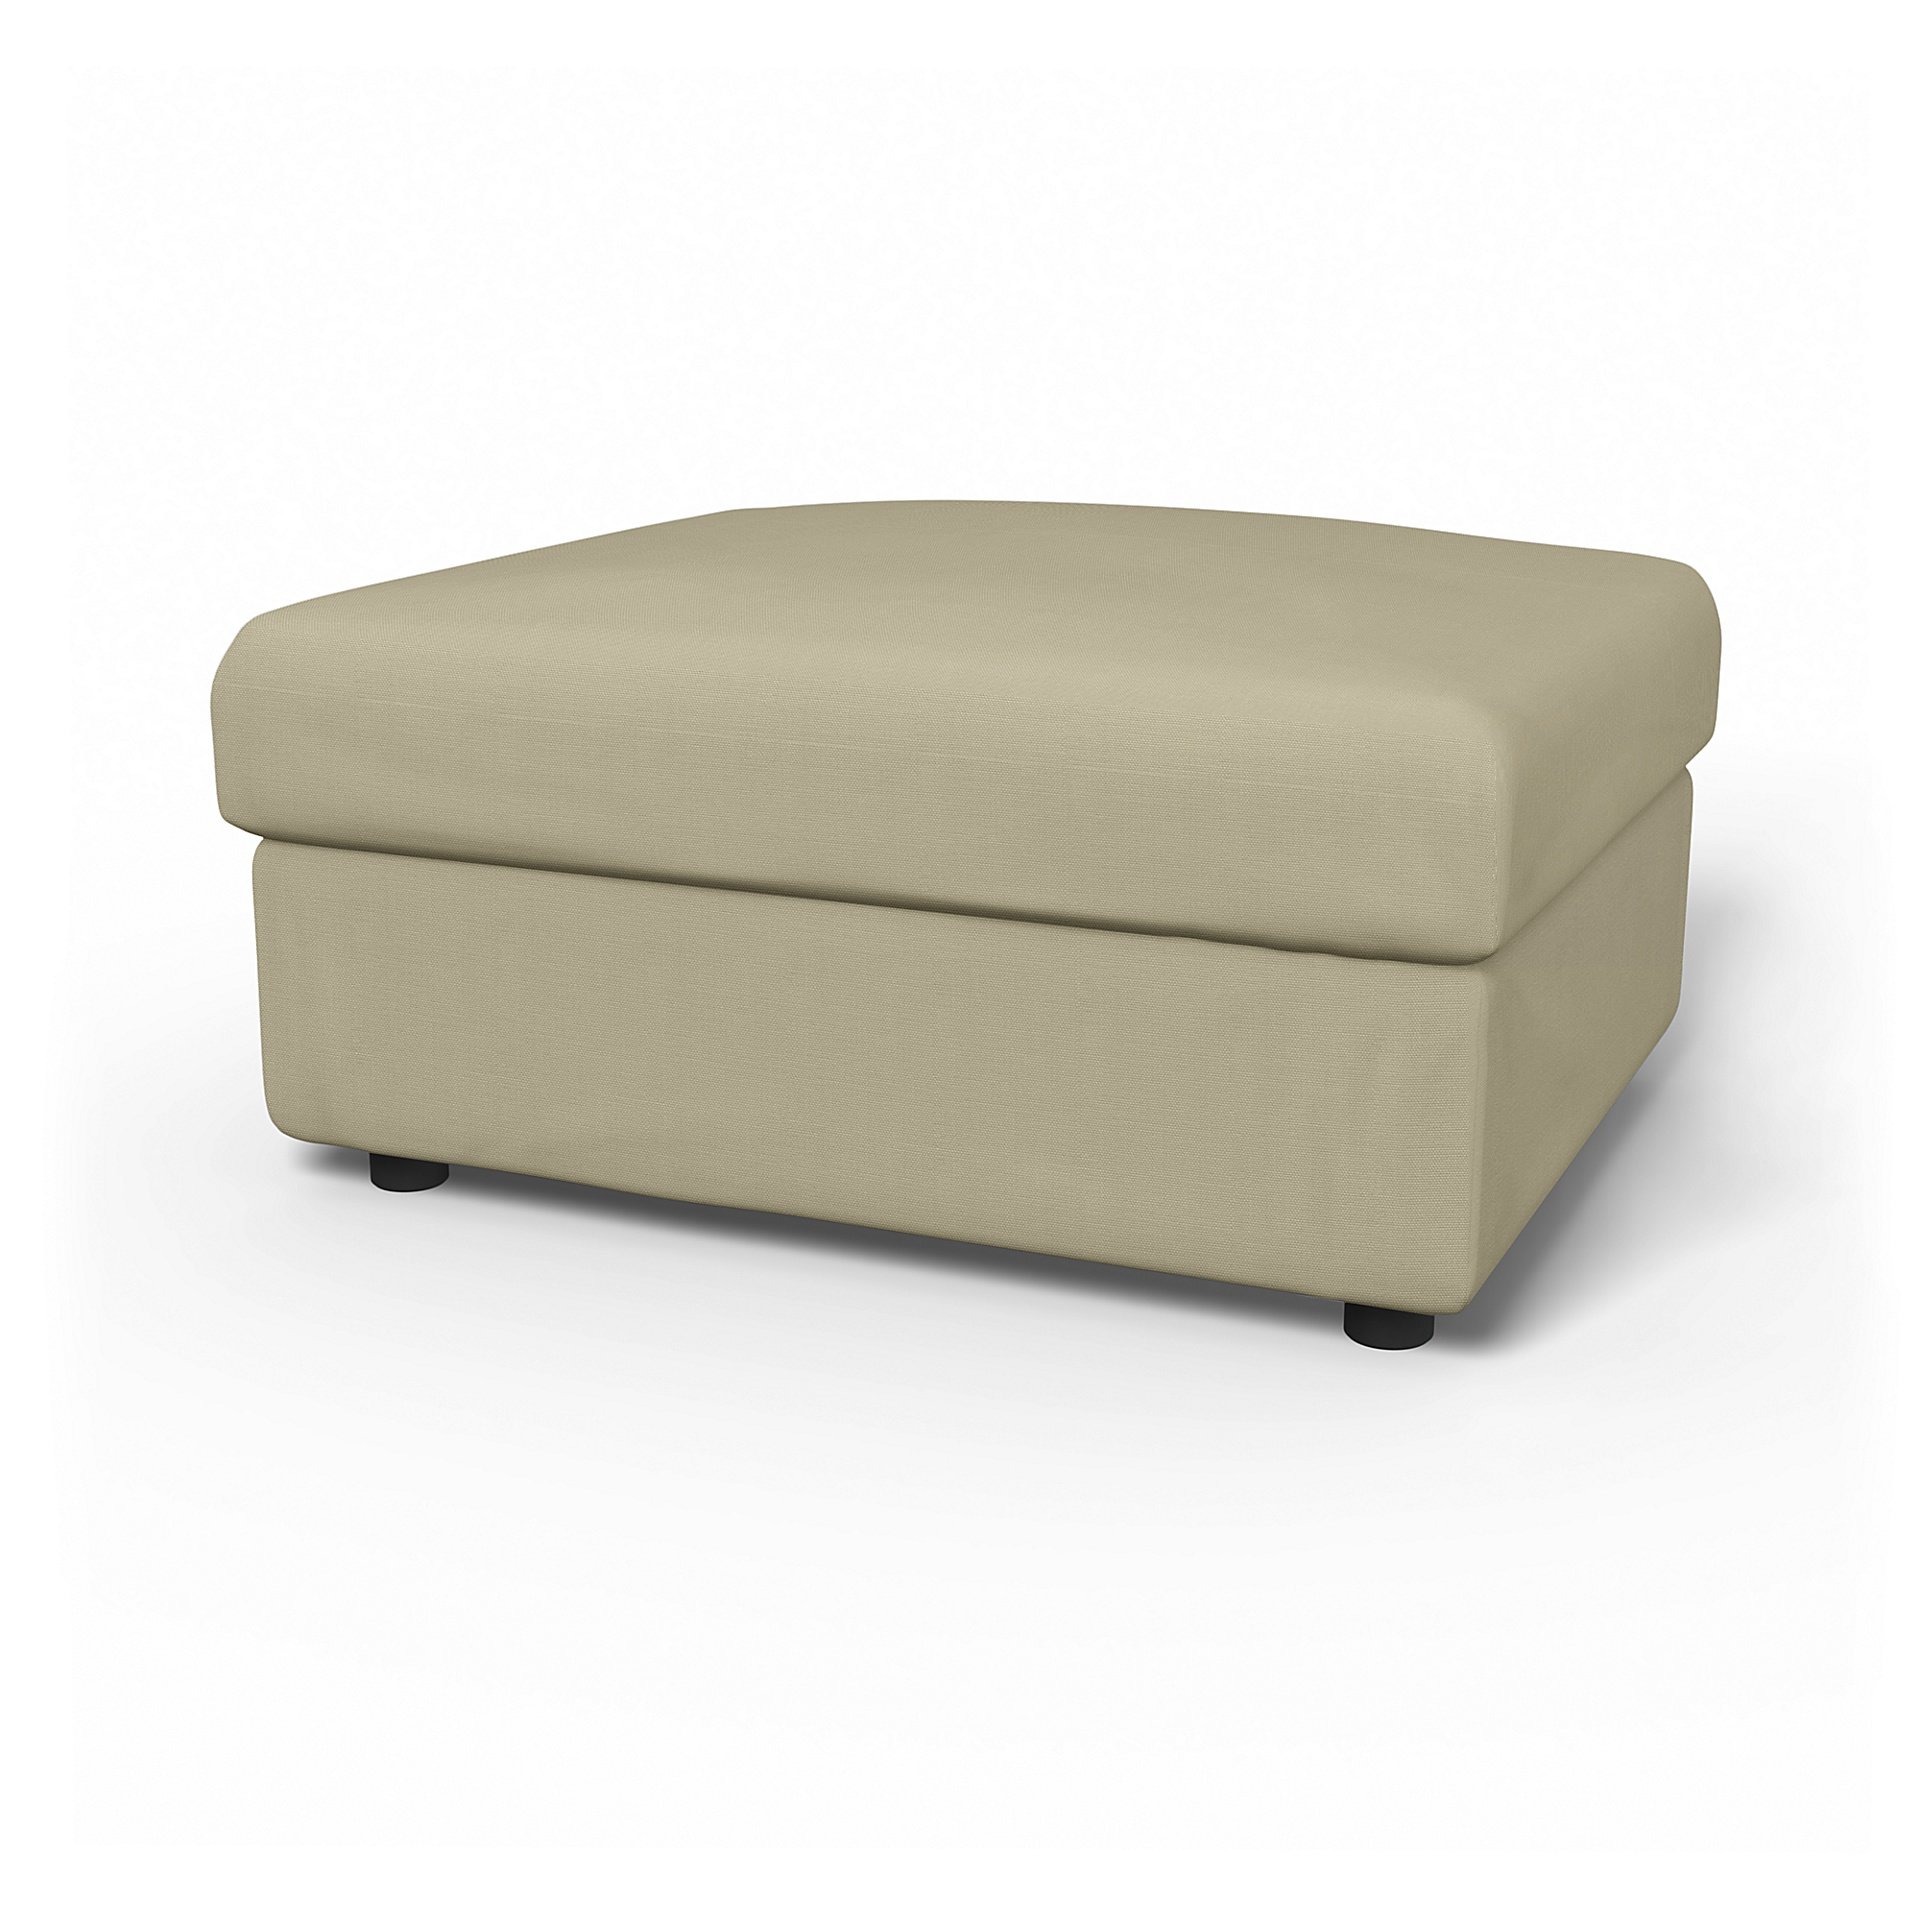 IKEA - Vimle Footstool with Storage Cover, Sand Beige, Cotton - Bemz